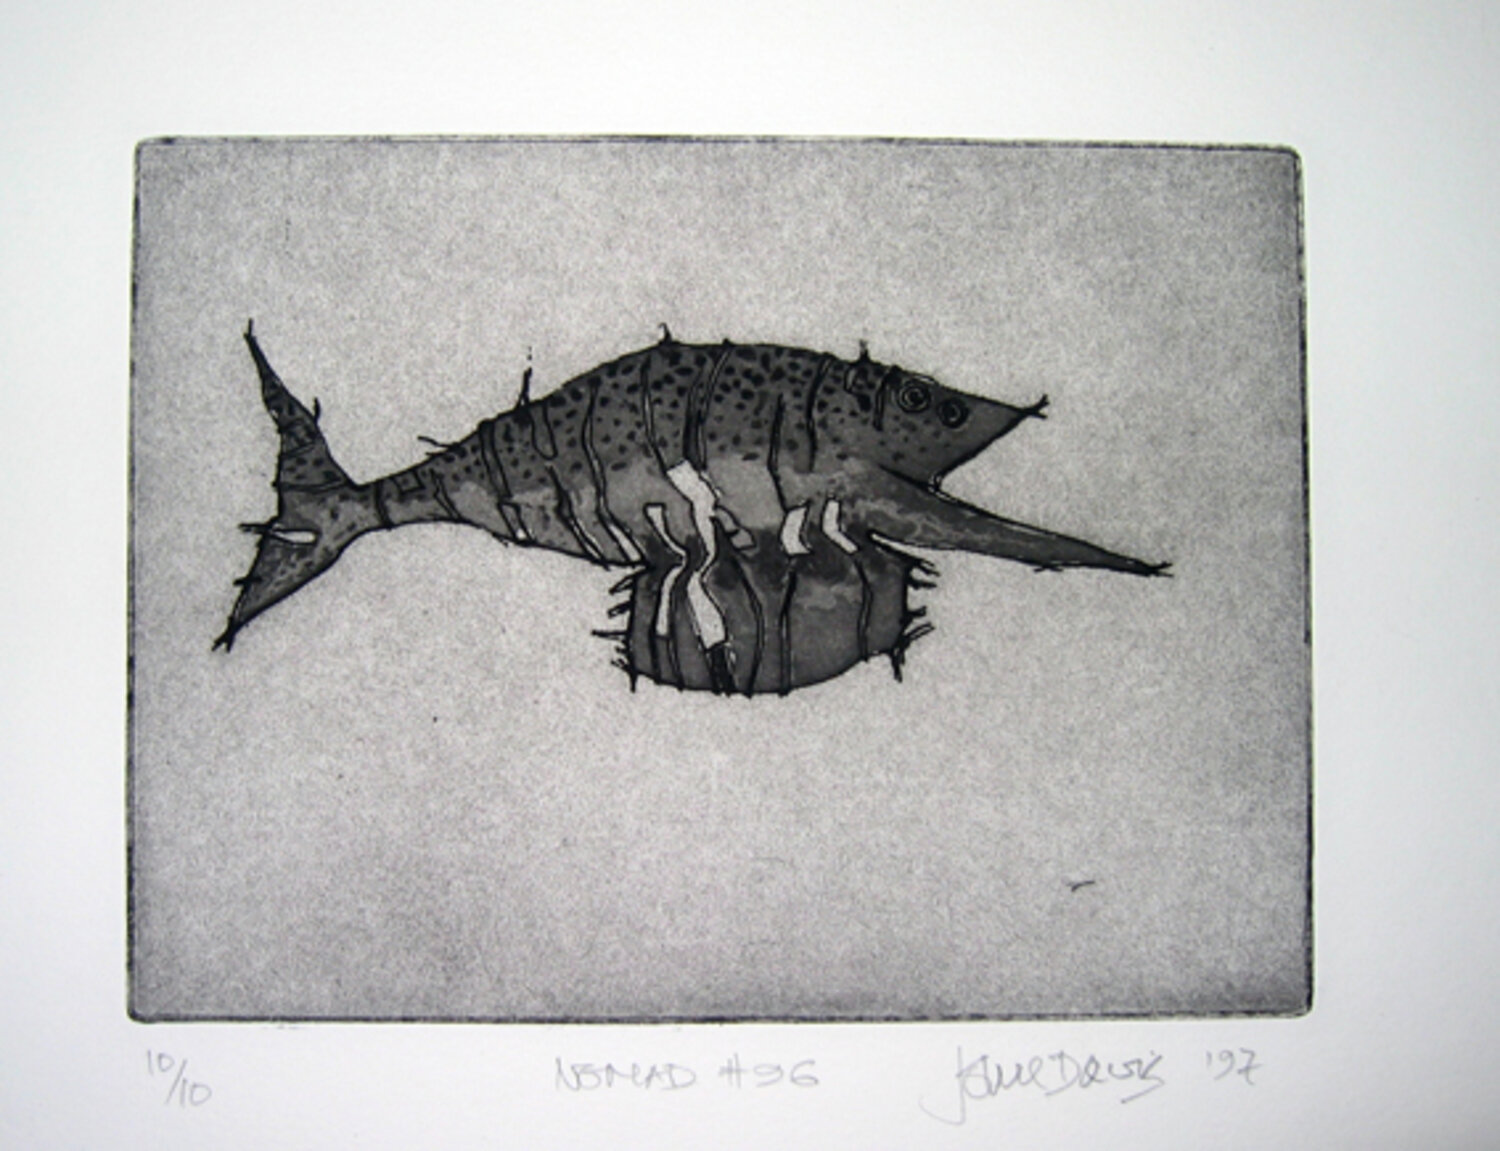   Nomad #96  (1997), etching, 18 x 27 cm 